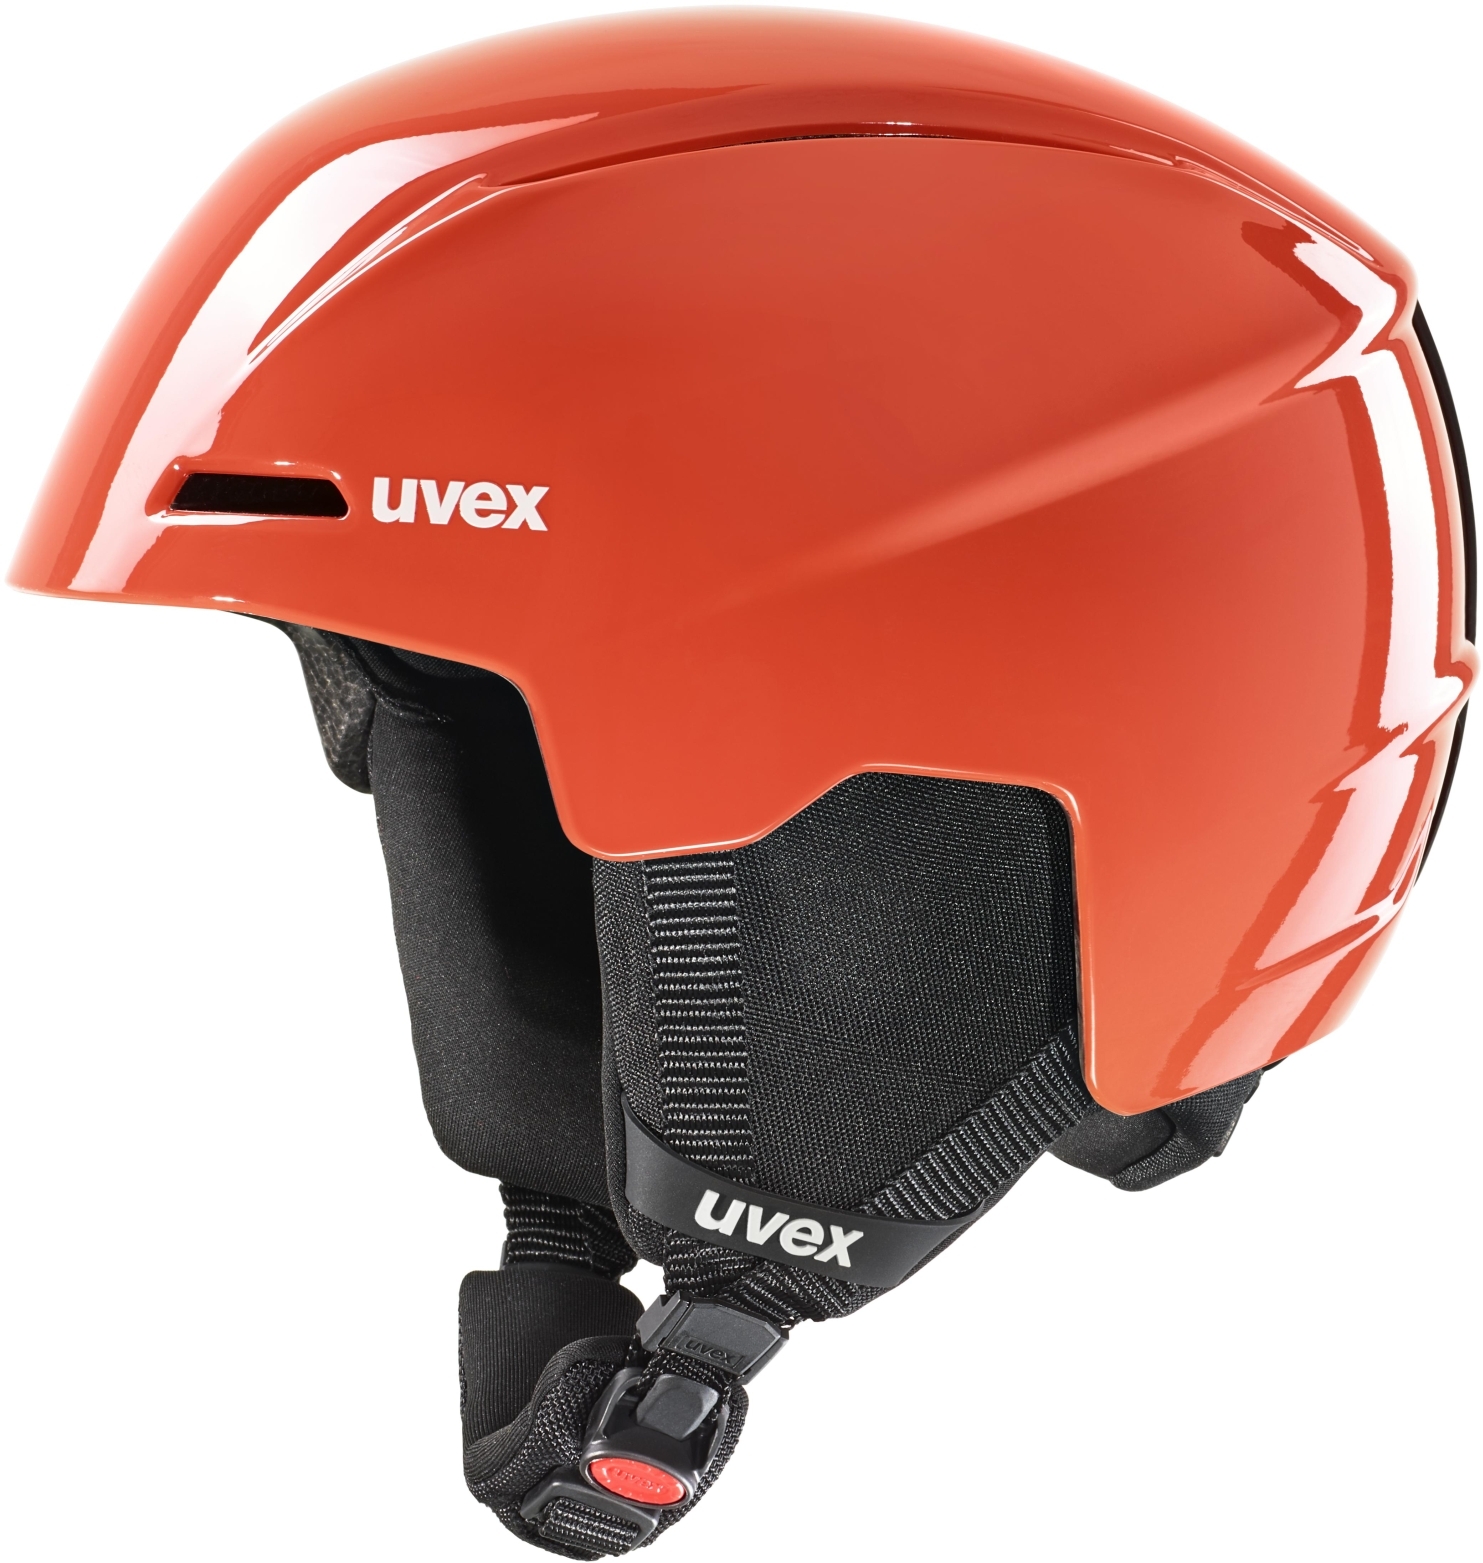 Uvex Viti - fierce red 51-55